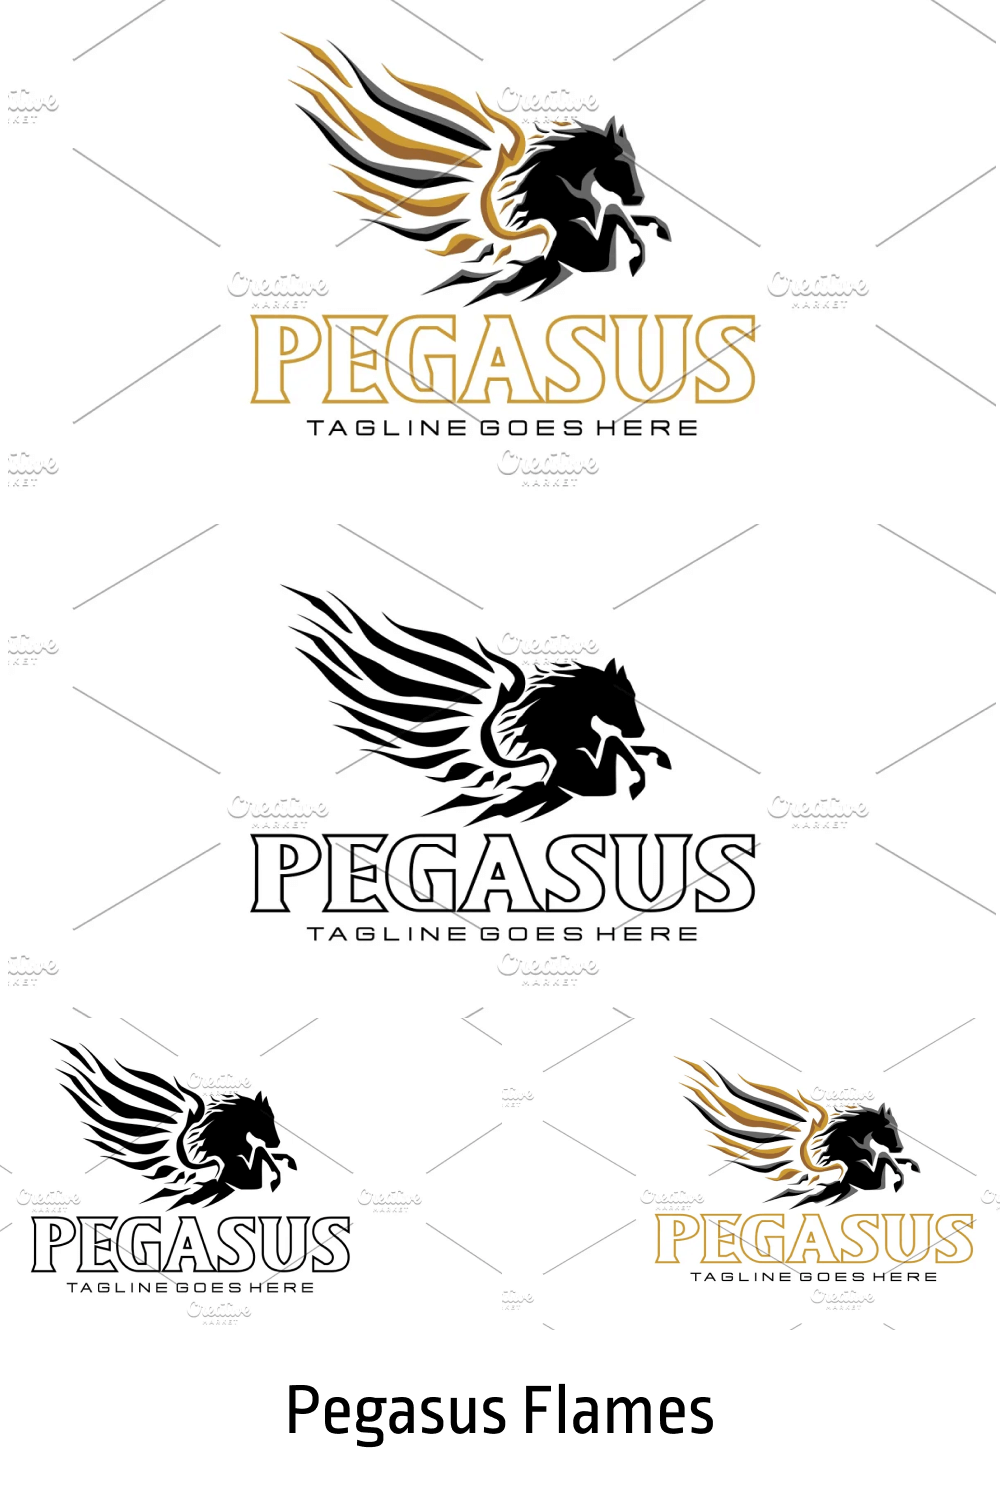 Pegasus corp logo headline.